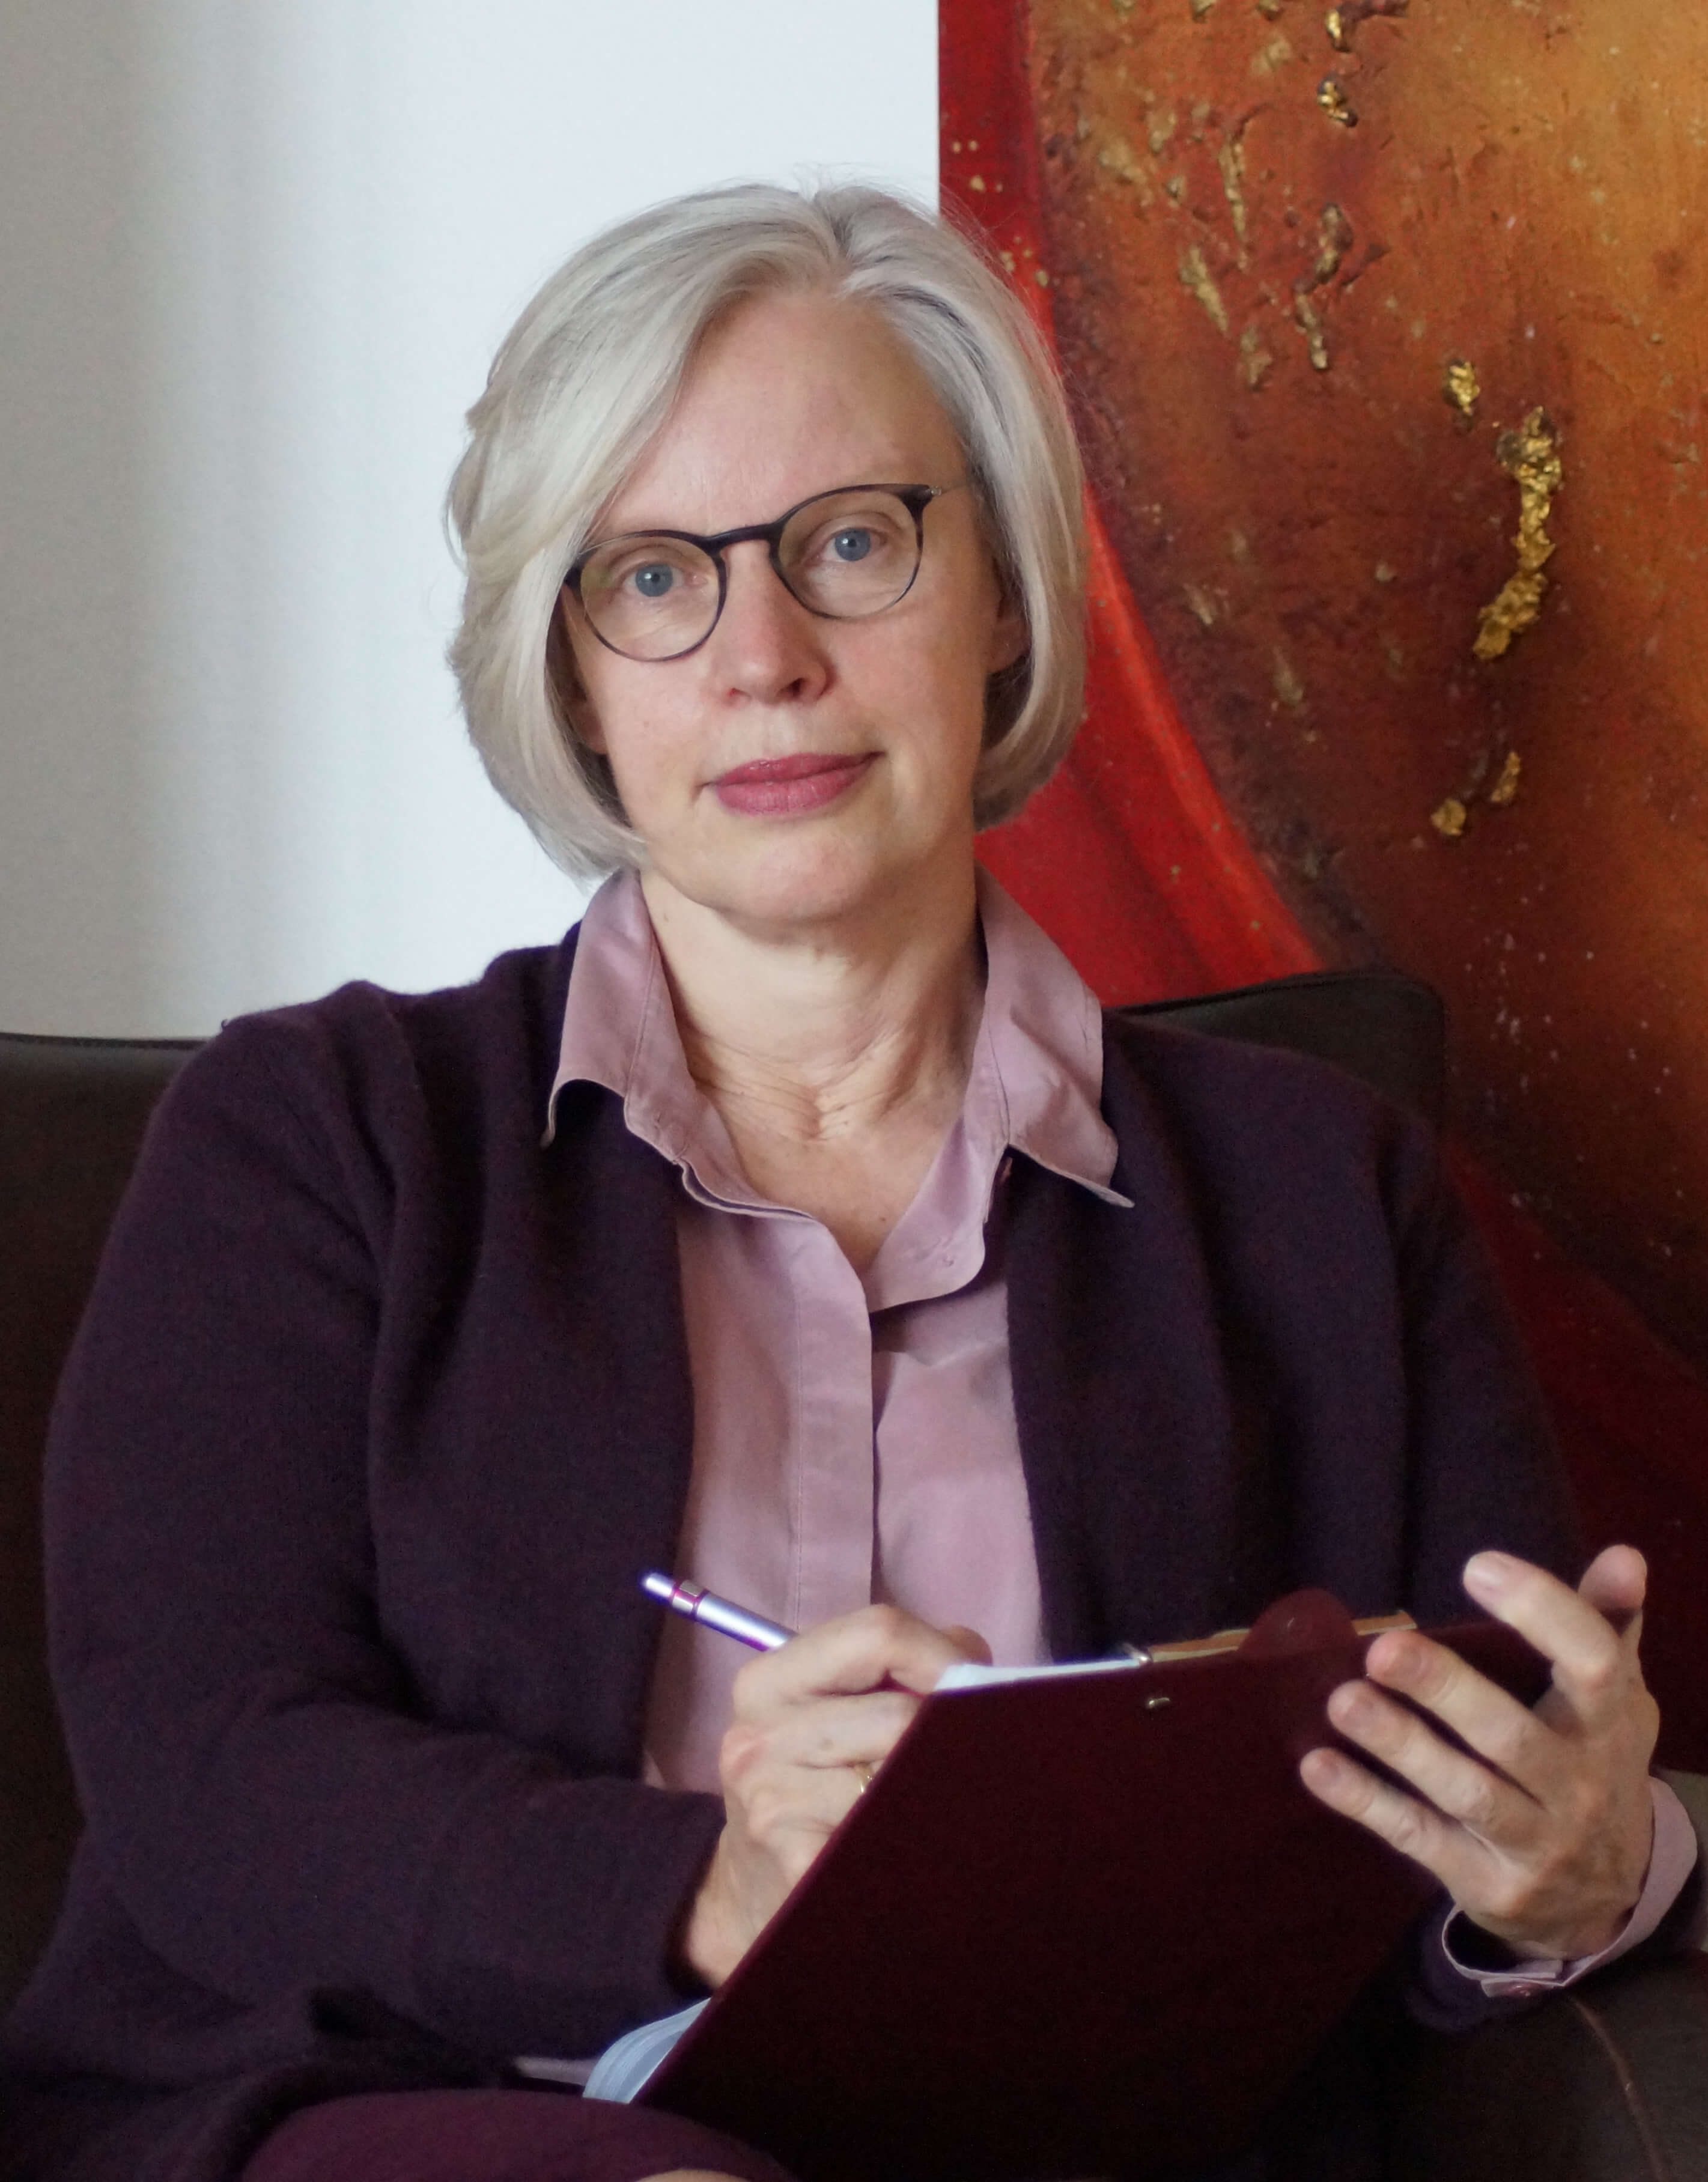 Dr. Susanne Schütte in a chair